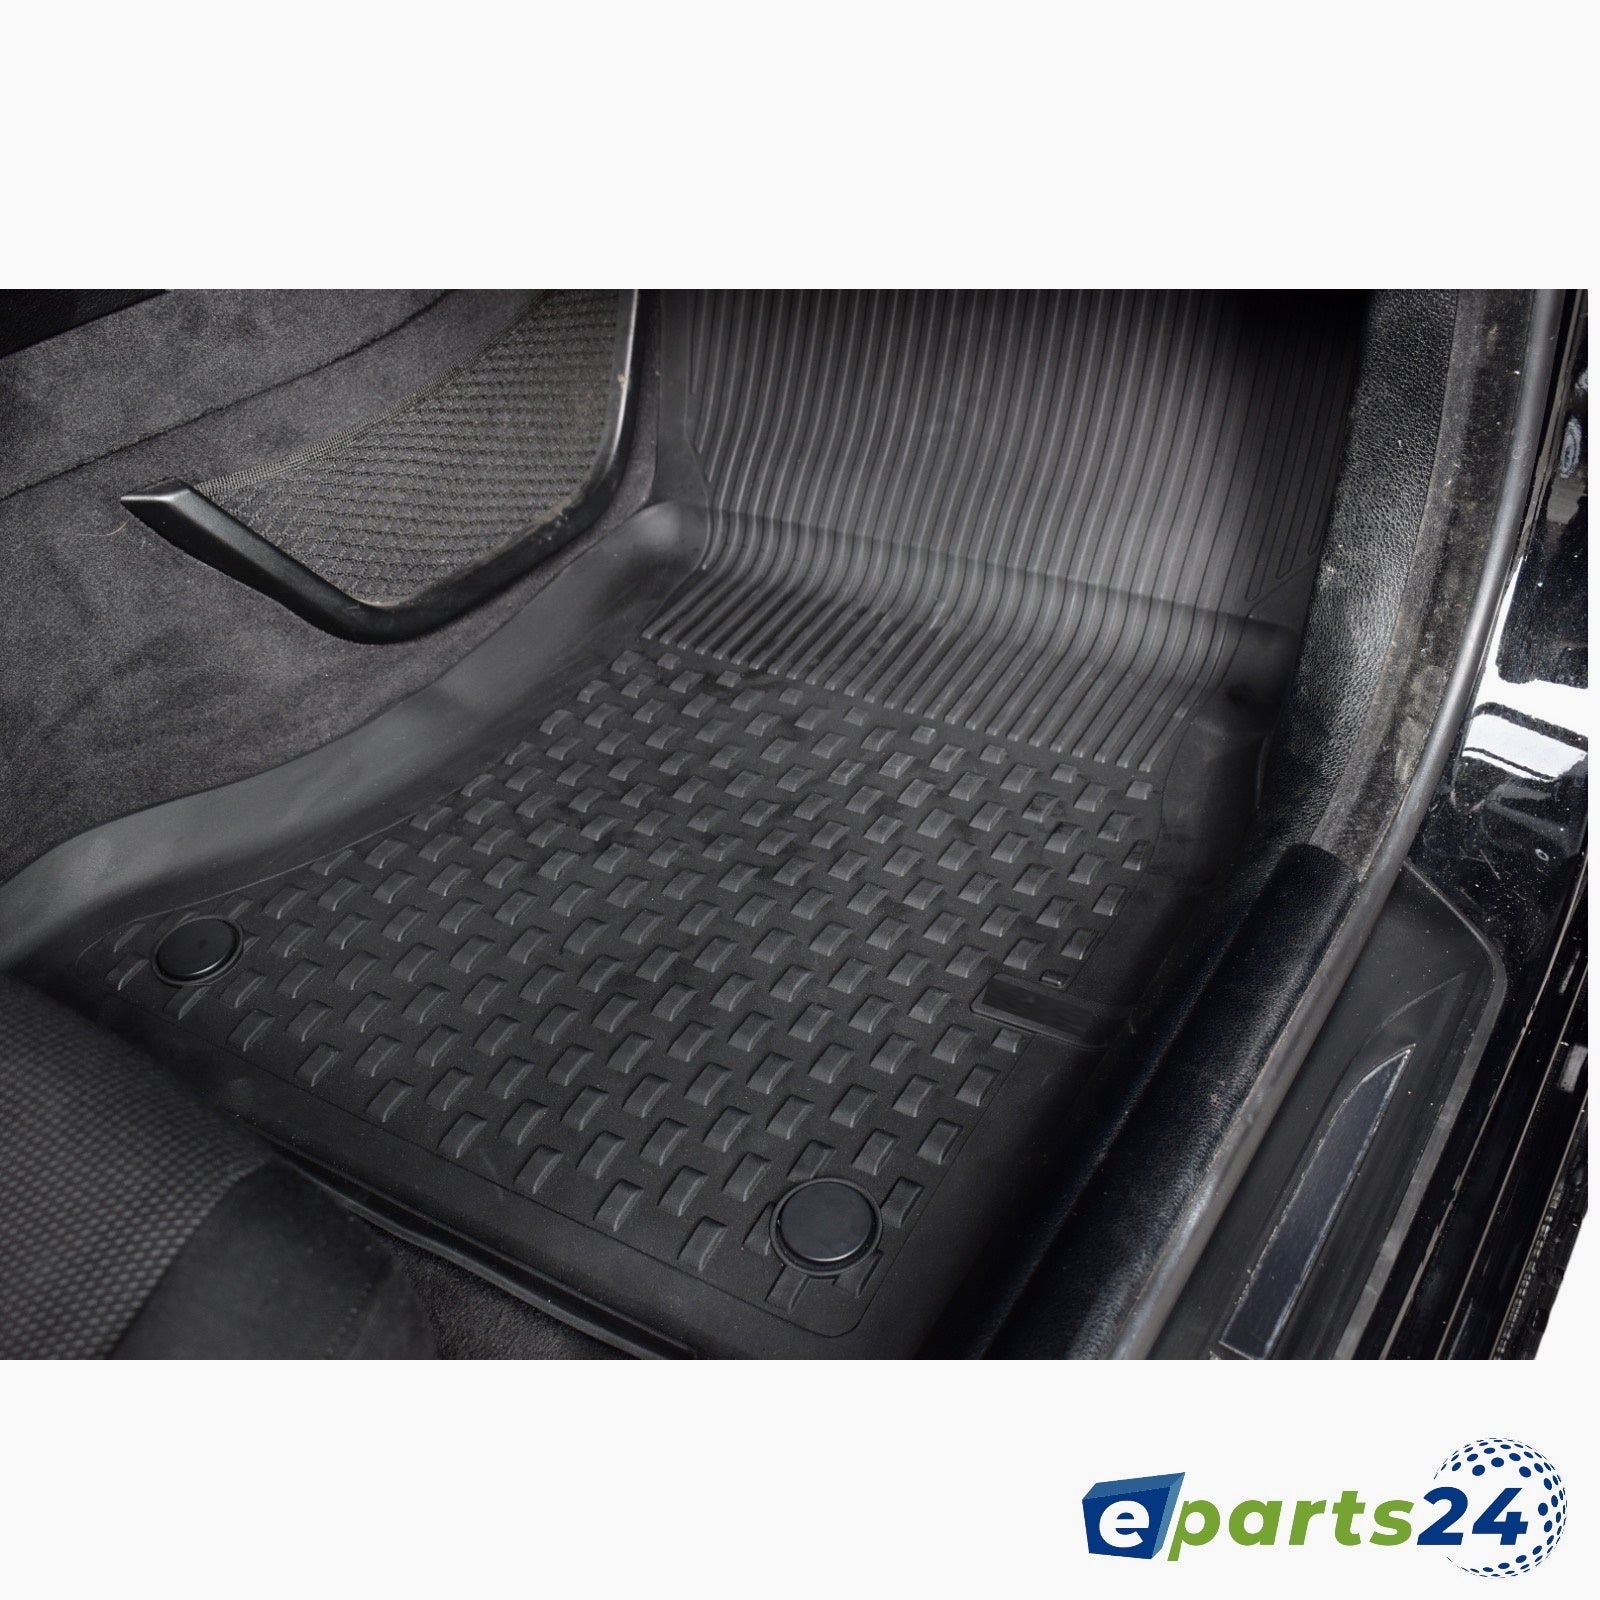 Automatten Fußmatten Premium TPE für II E-Parts24 2018-2023 Dacia Duster M – 5tlg